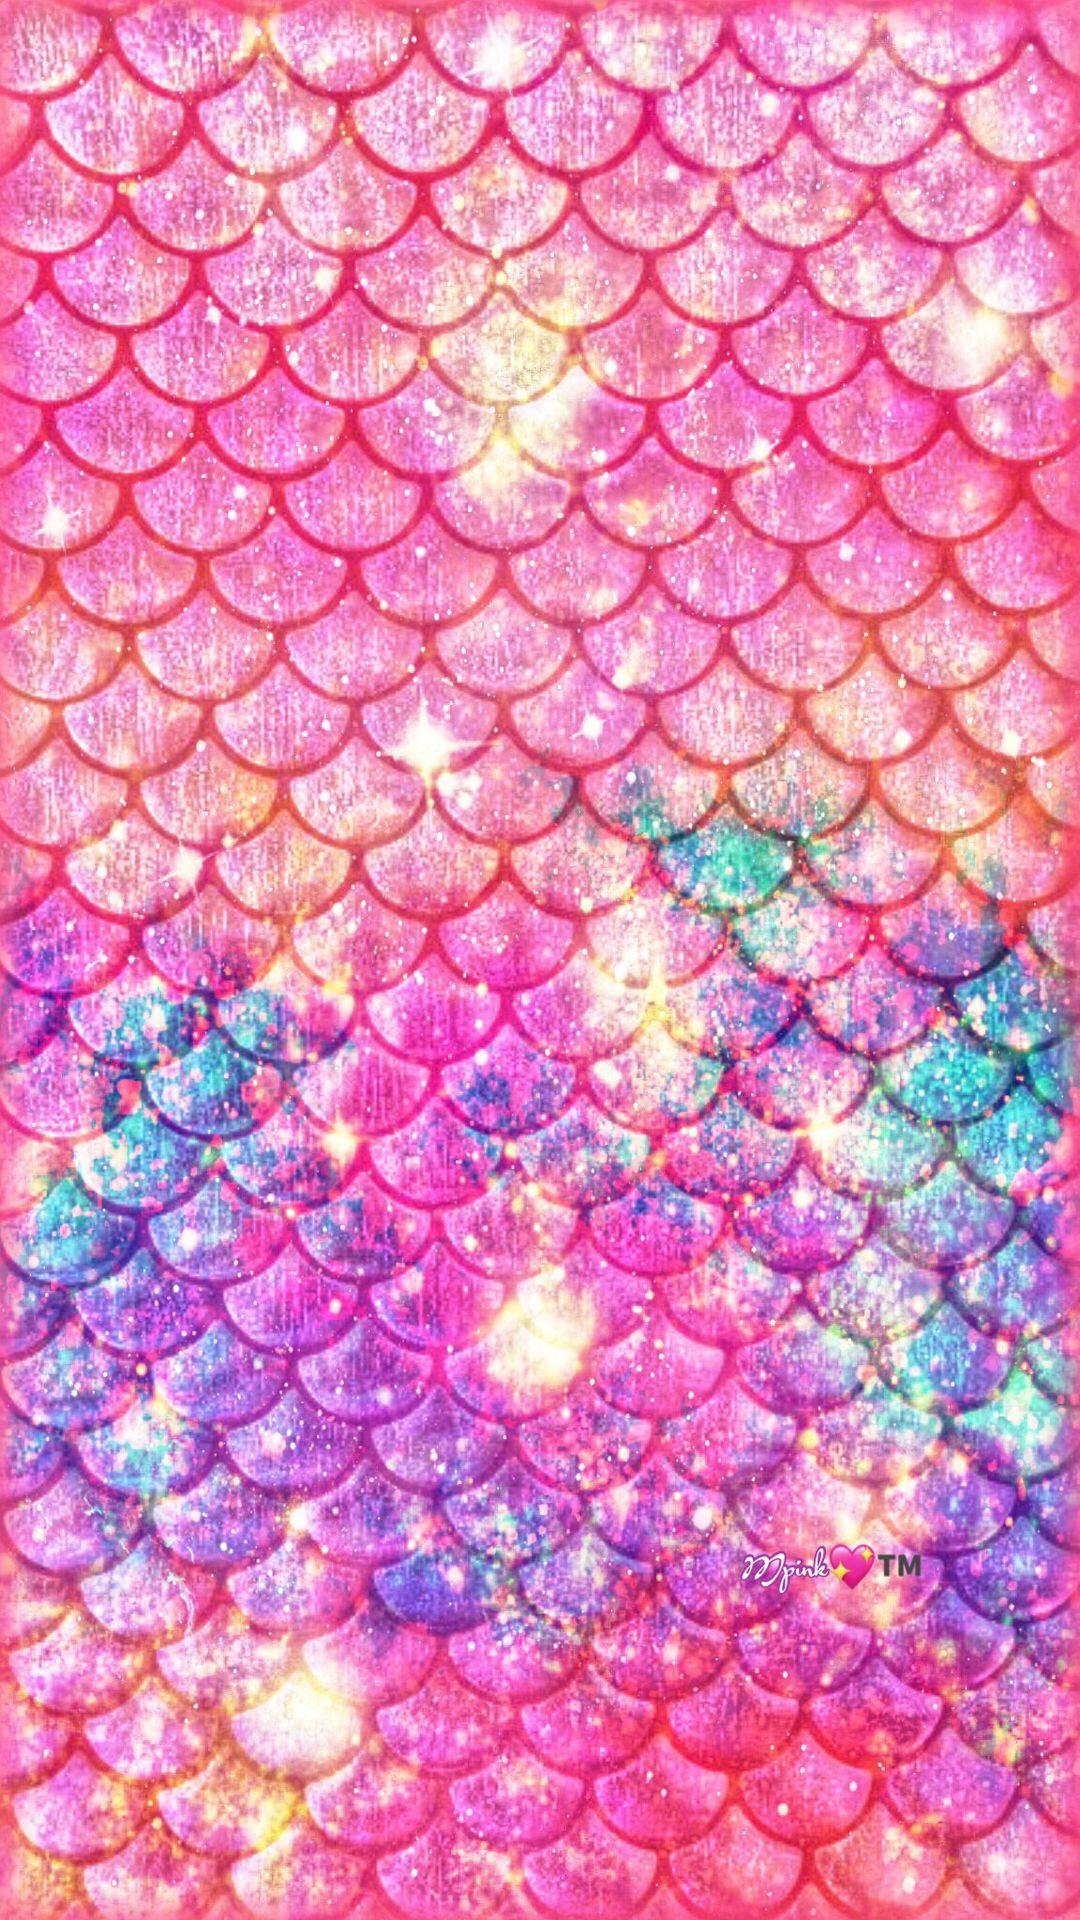 Mermaid wallpaper iphone.com